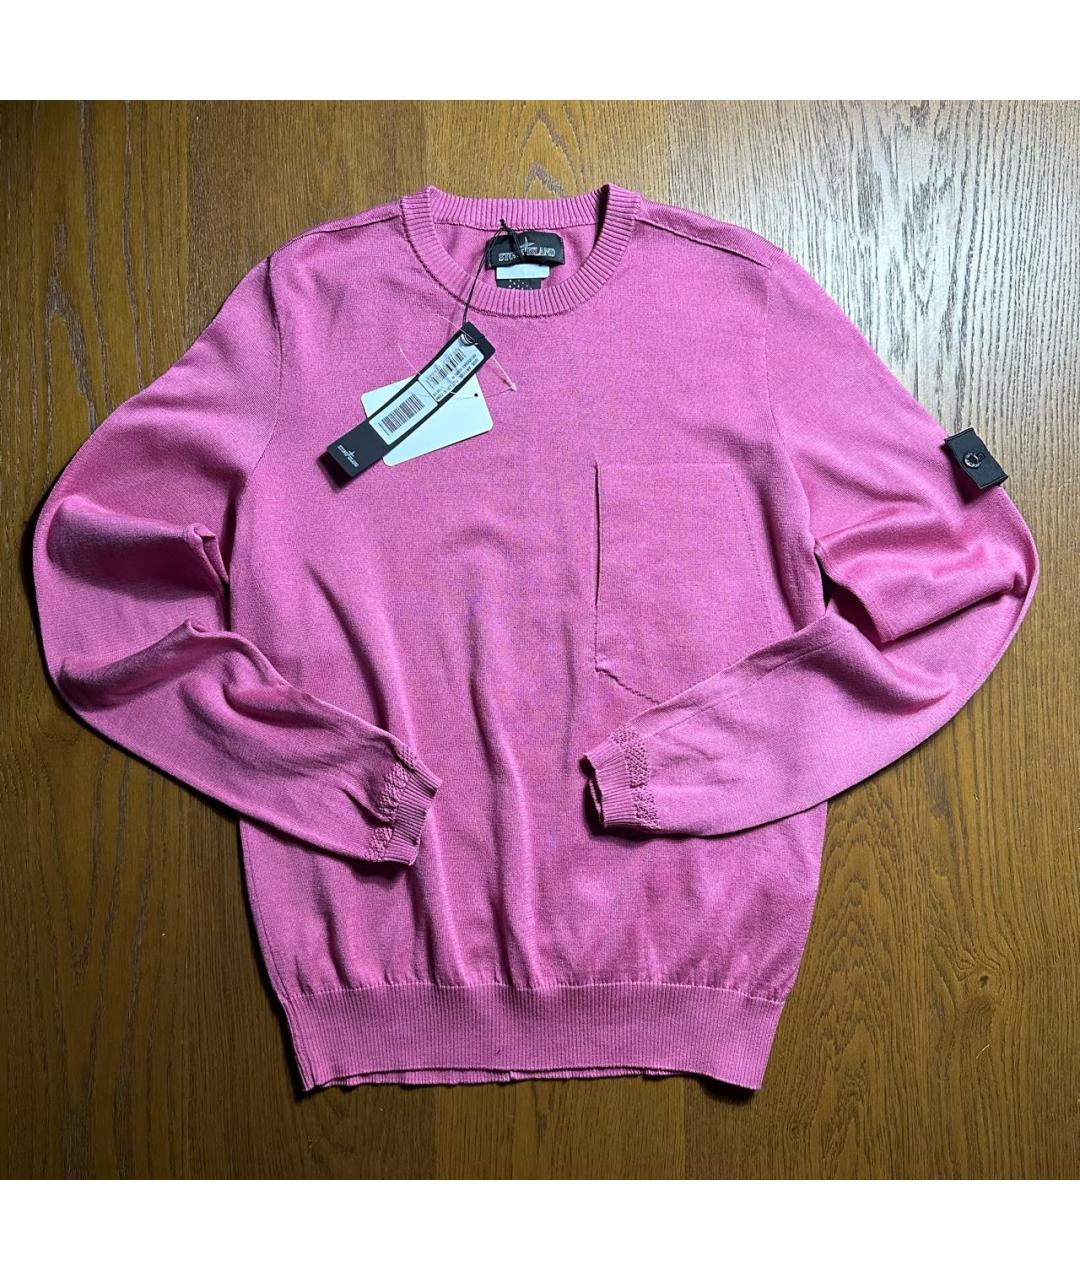 STONE ISLAND SHADOW PROJECT Розовый хлопковый джемпер / свитер, фото 2